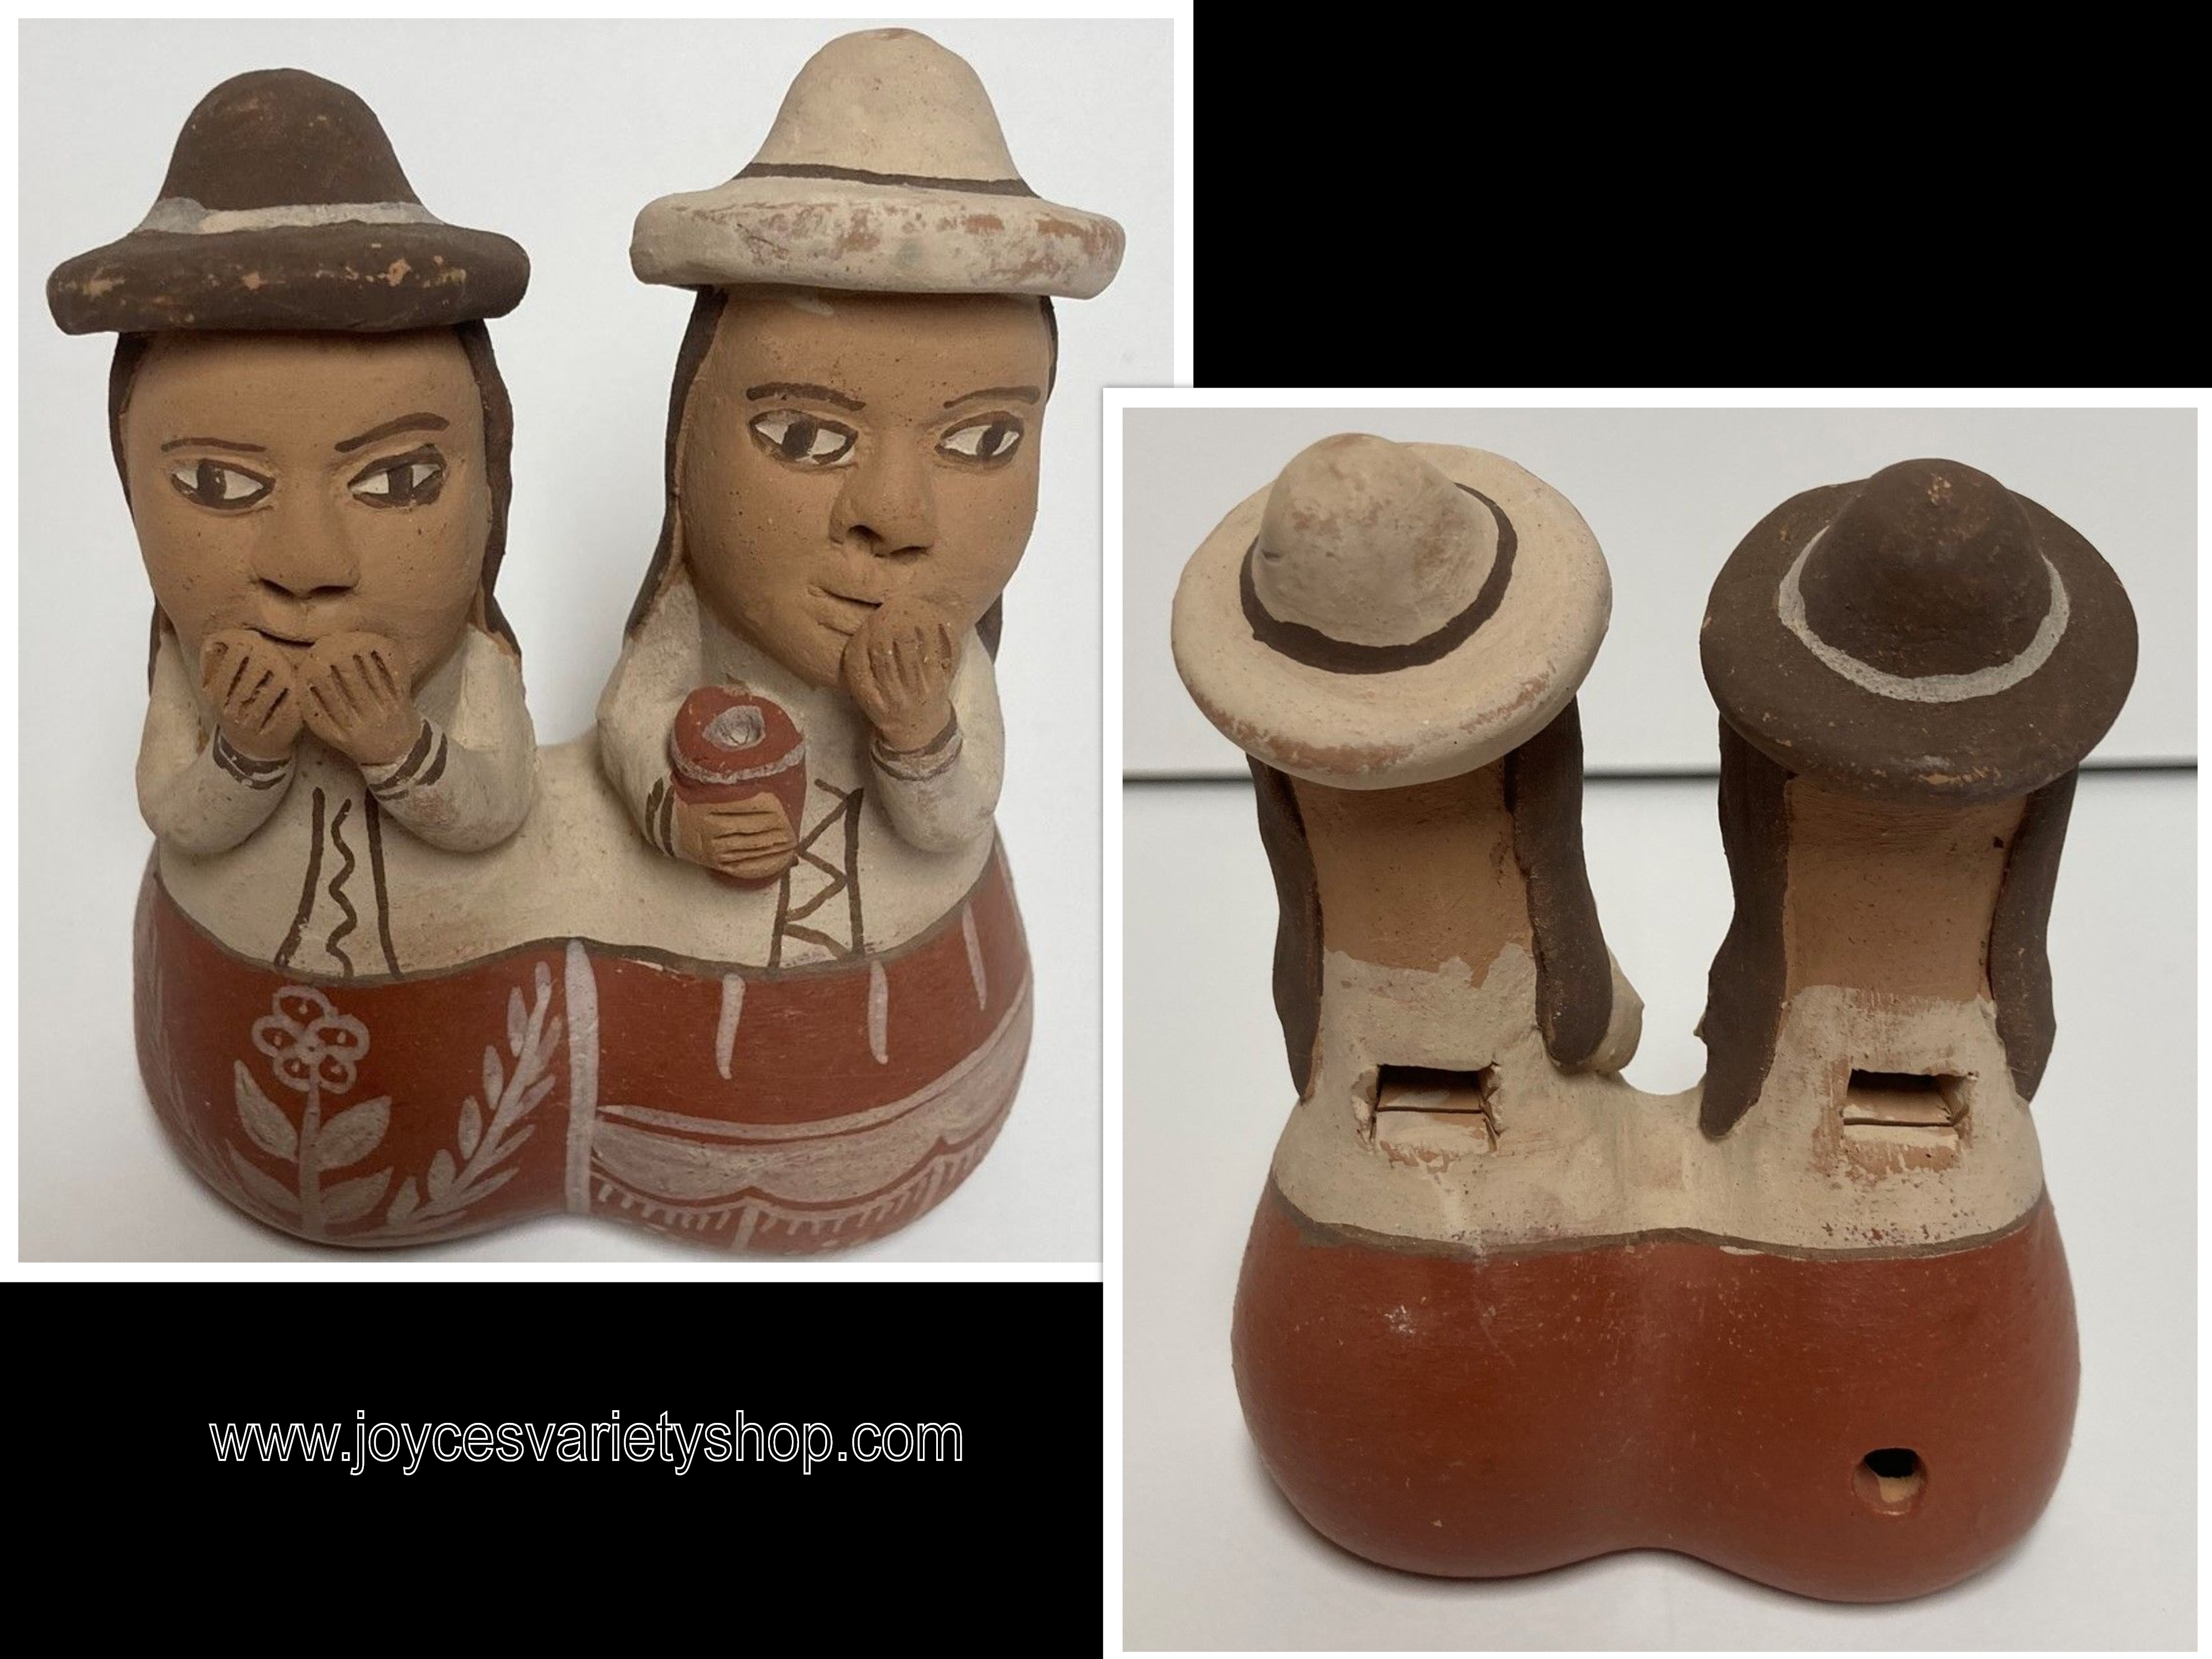 peruvian whistle pair 2 web collage.jpg